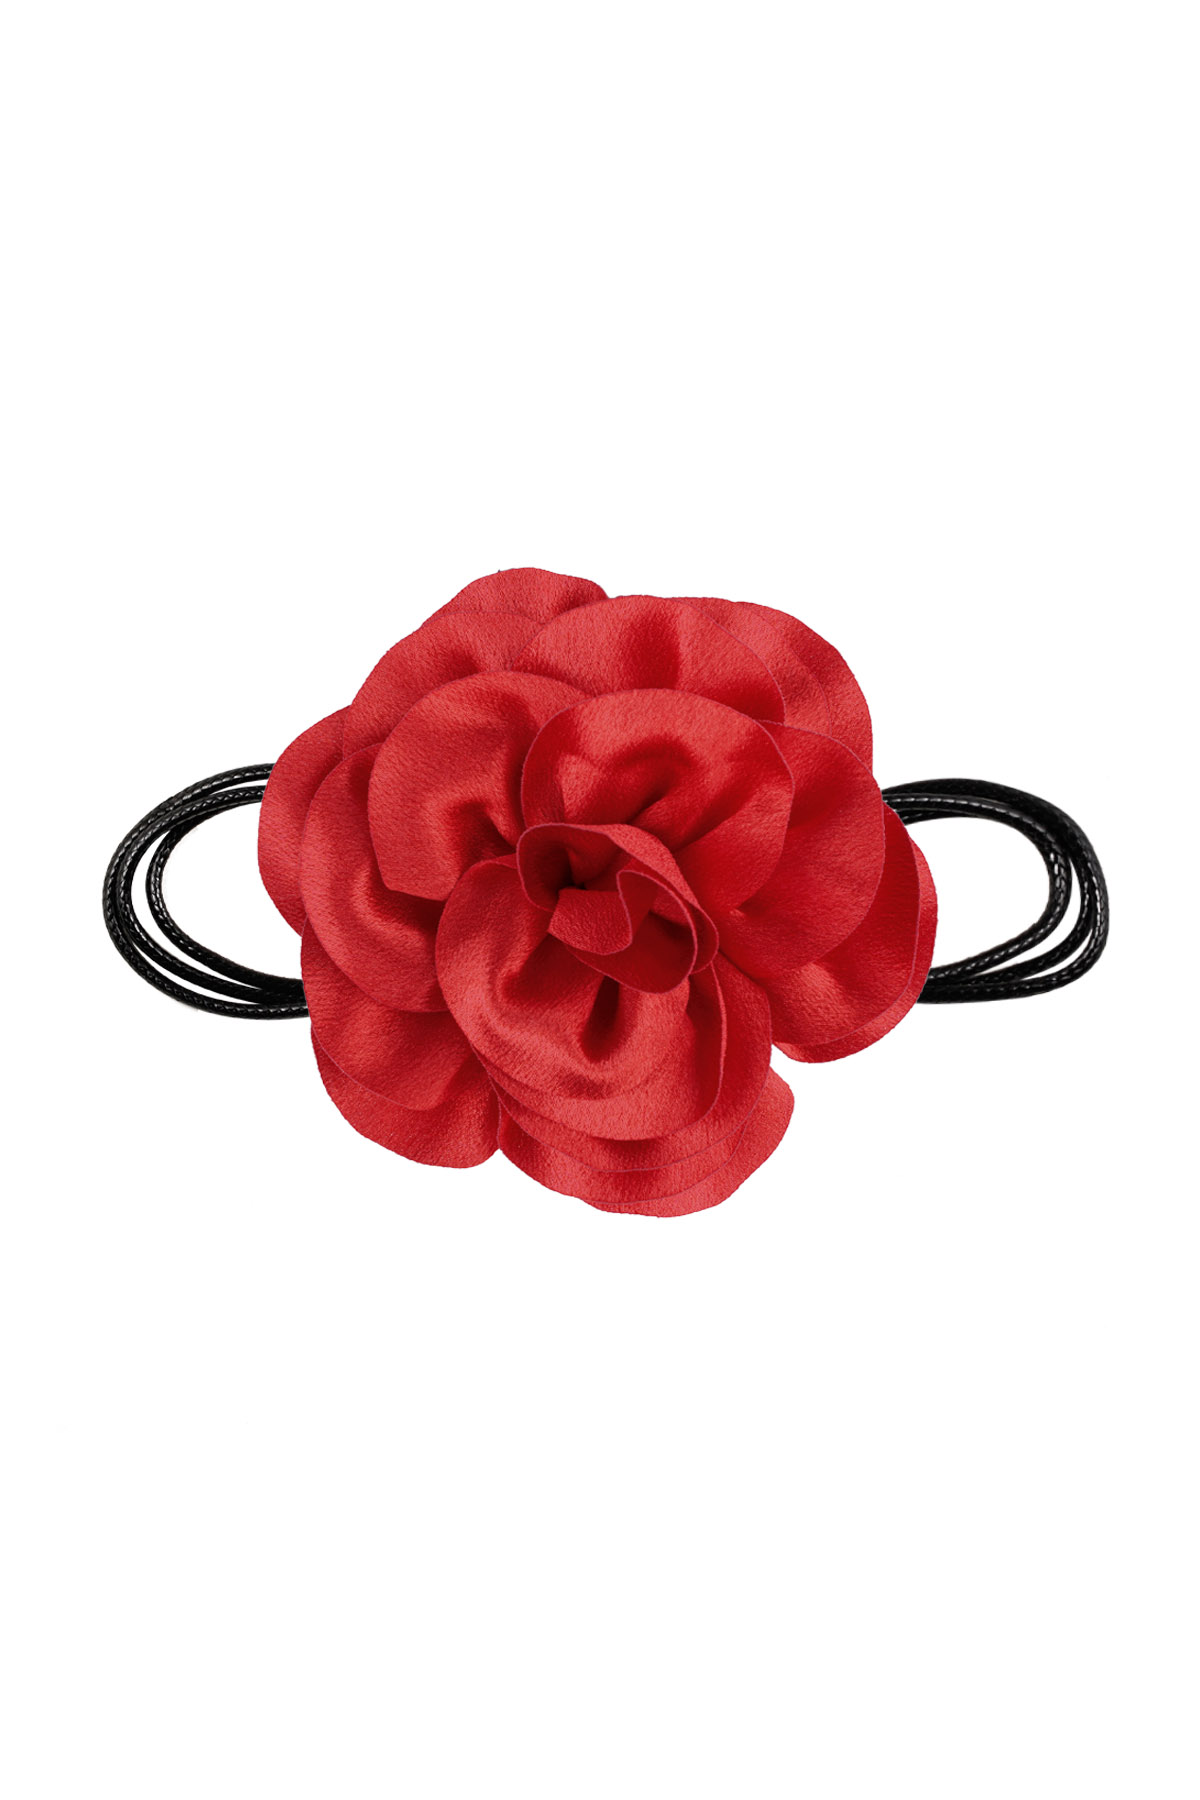 Collier corde fleur brillante - rouge